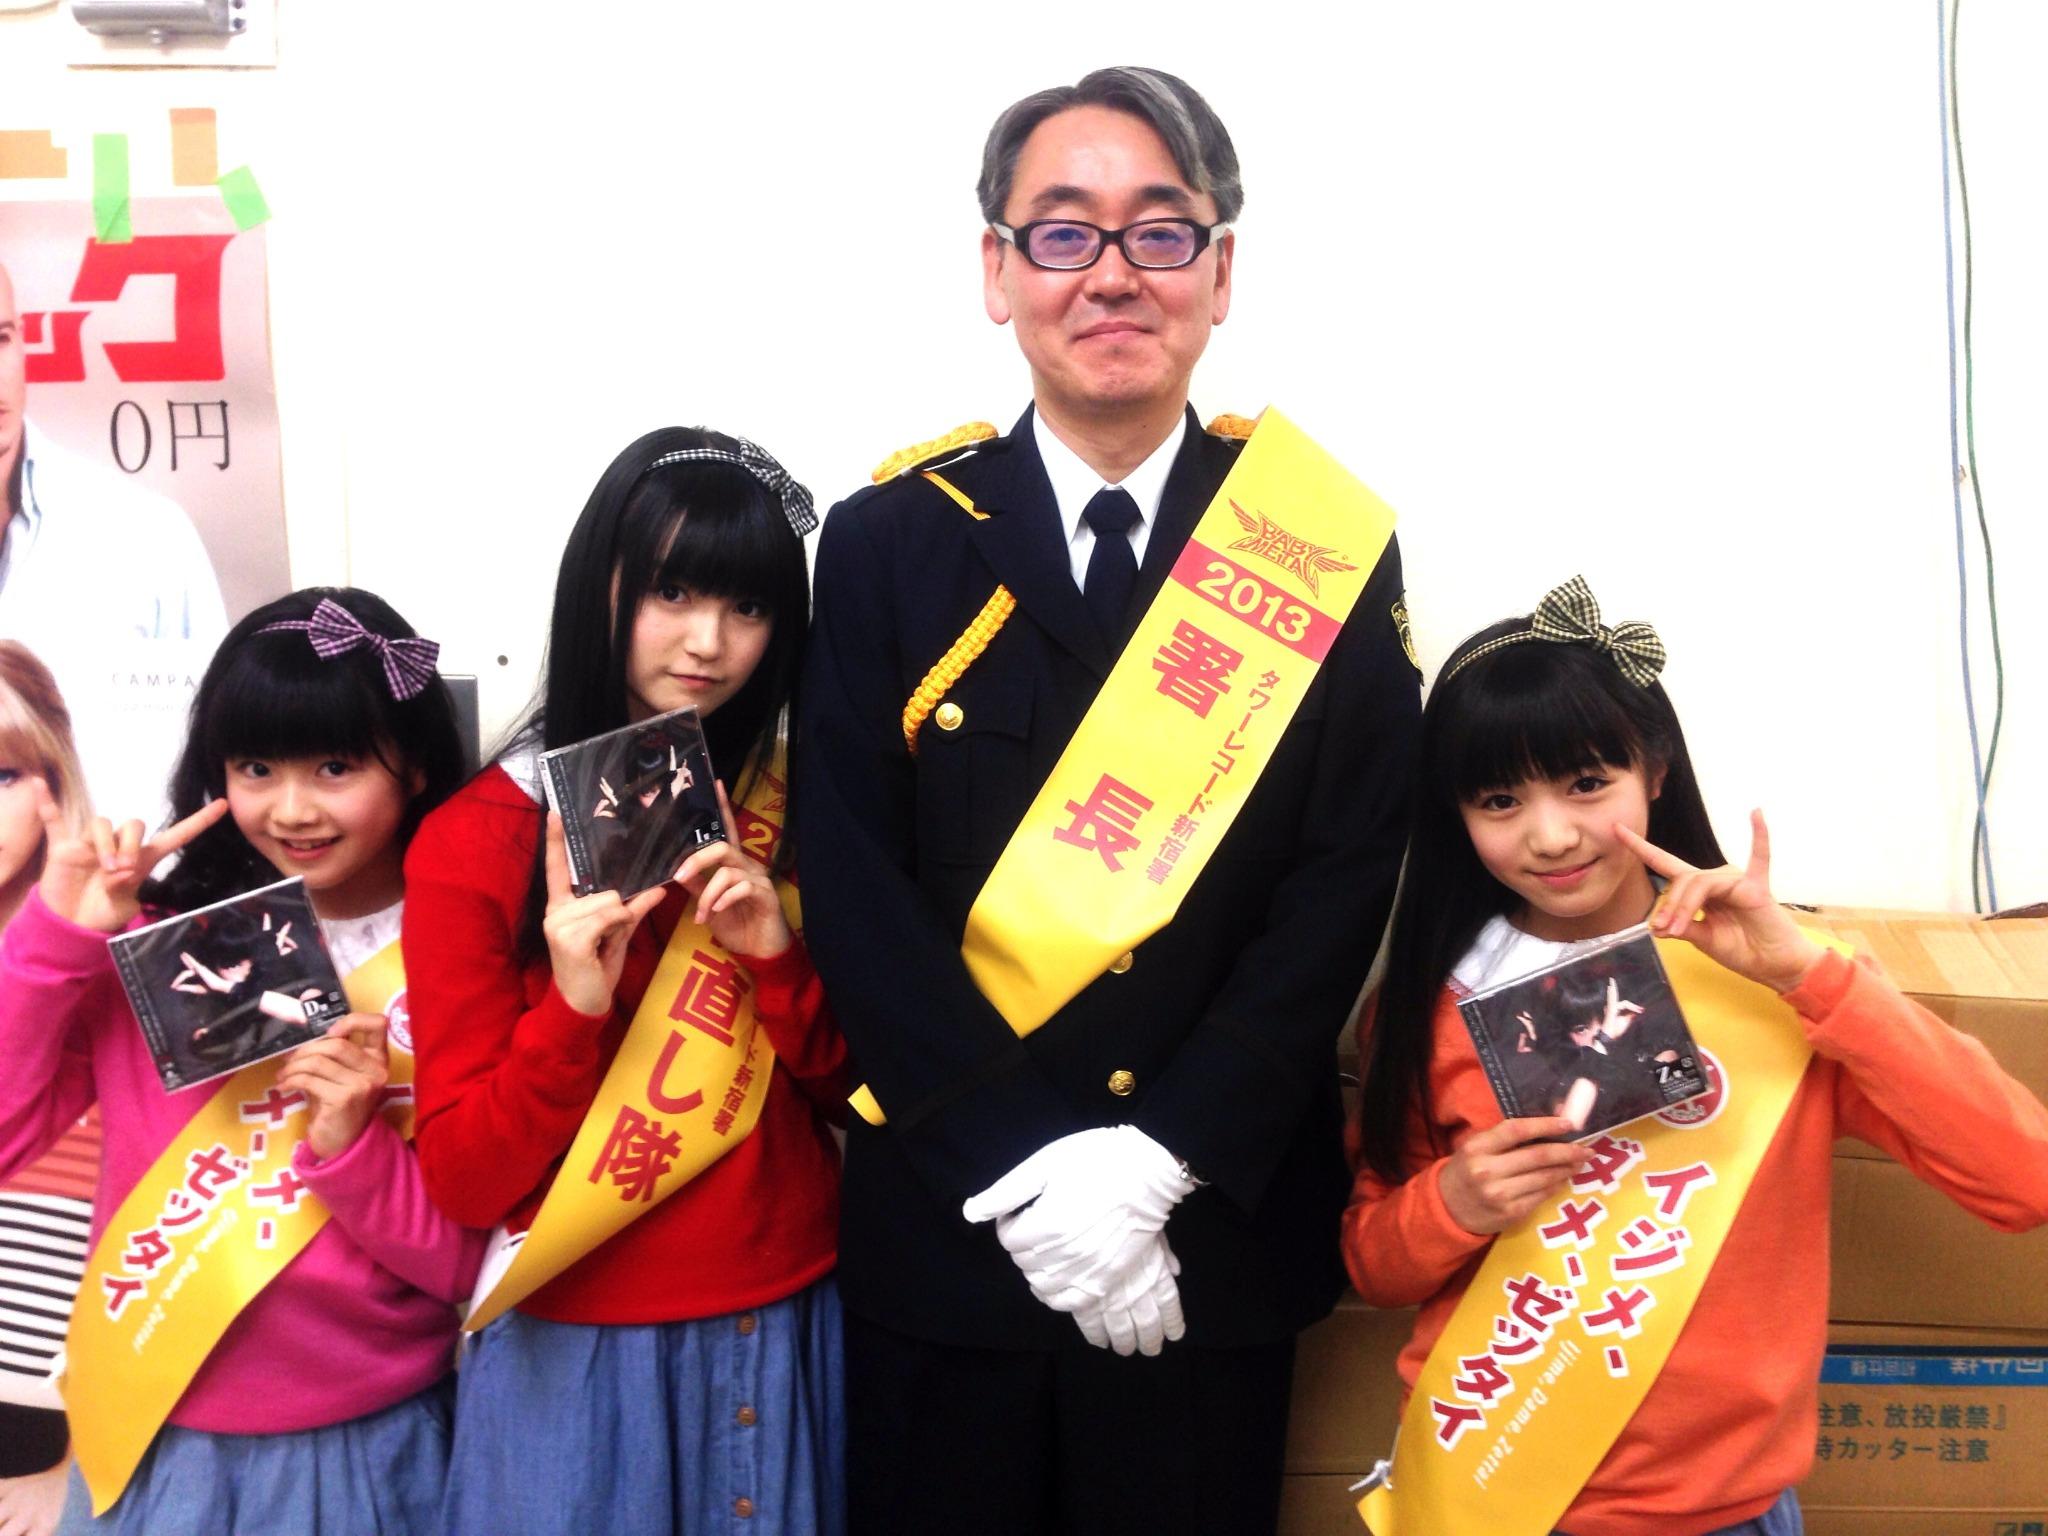 BABYMETAL promoting Ijime Dame Zettai with Tower Records CEO Minewaki Ikuo